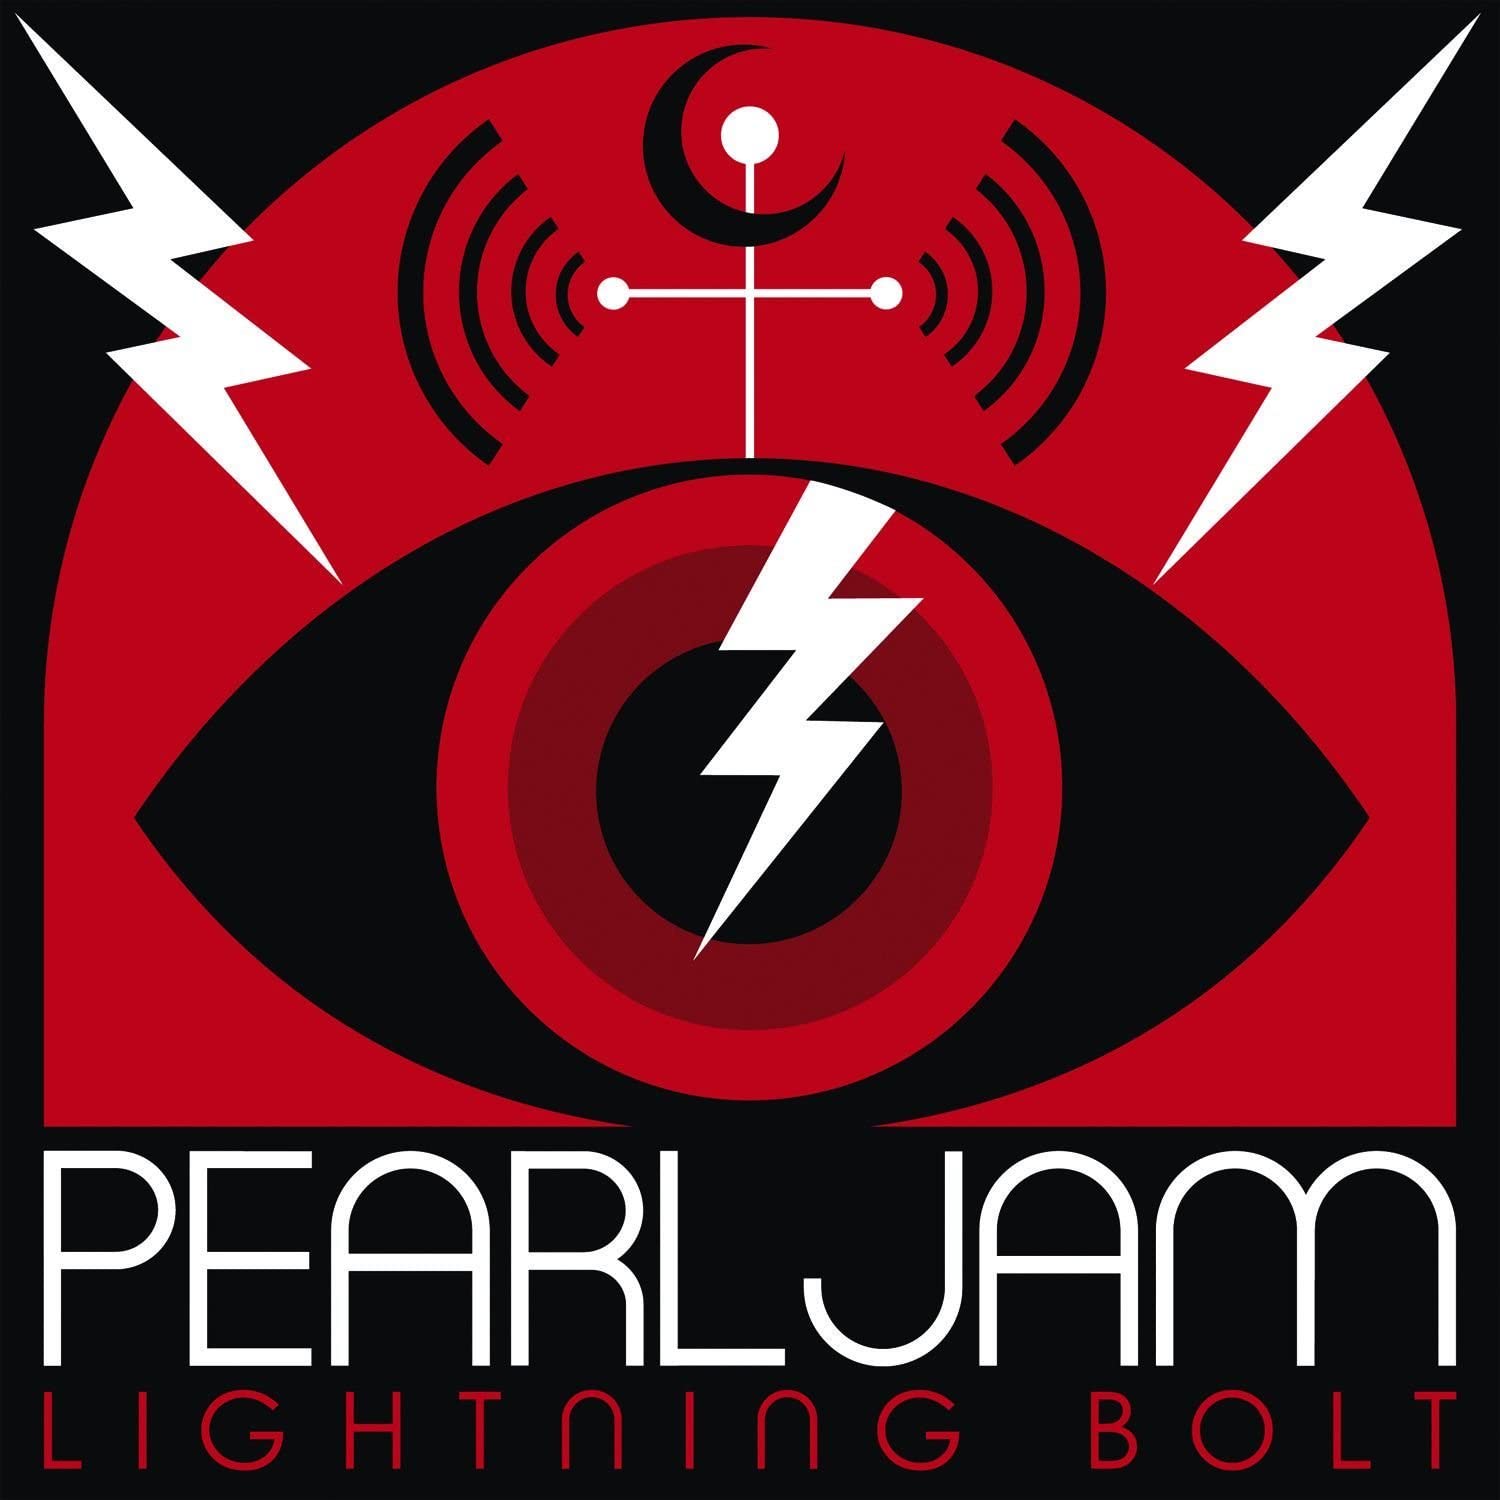 PearlJame_LightningBolt_jpg.jpg